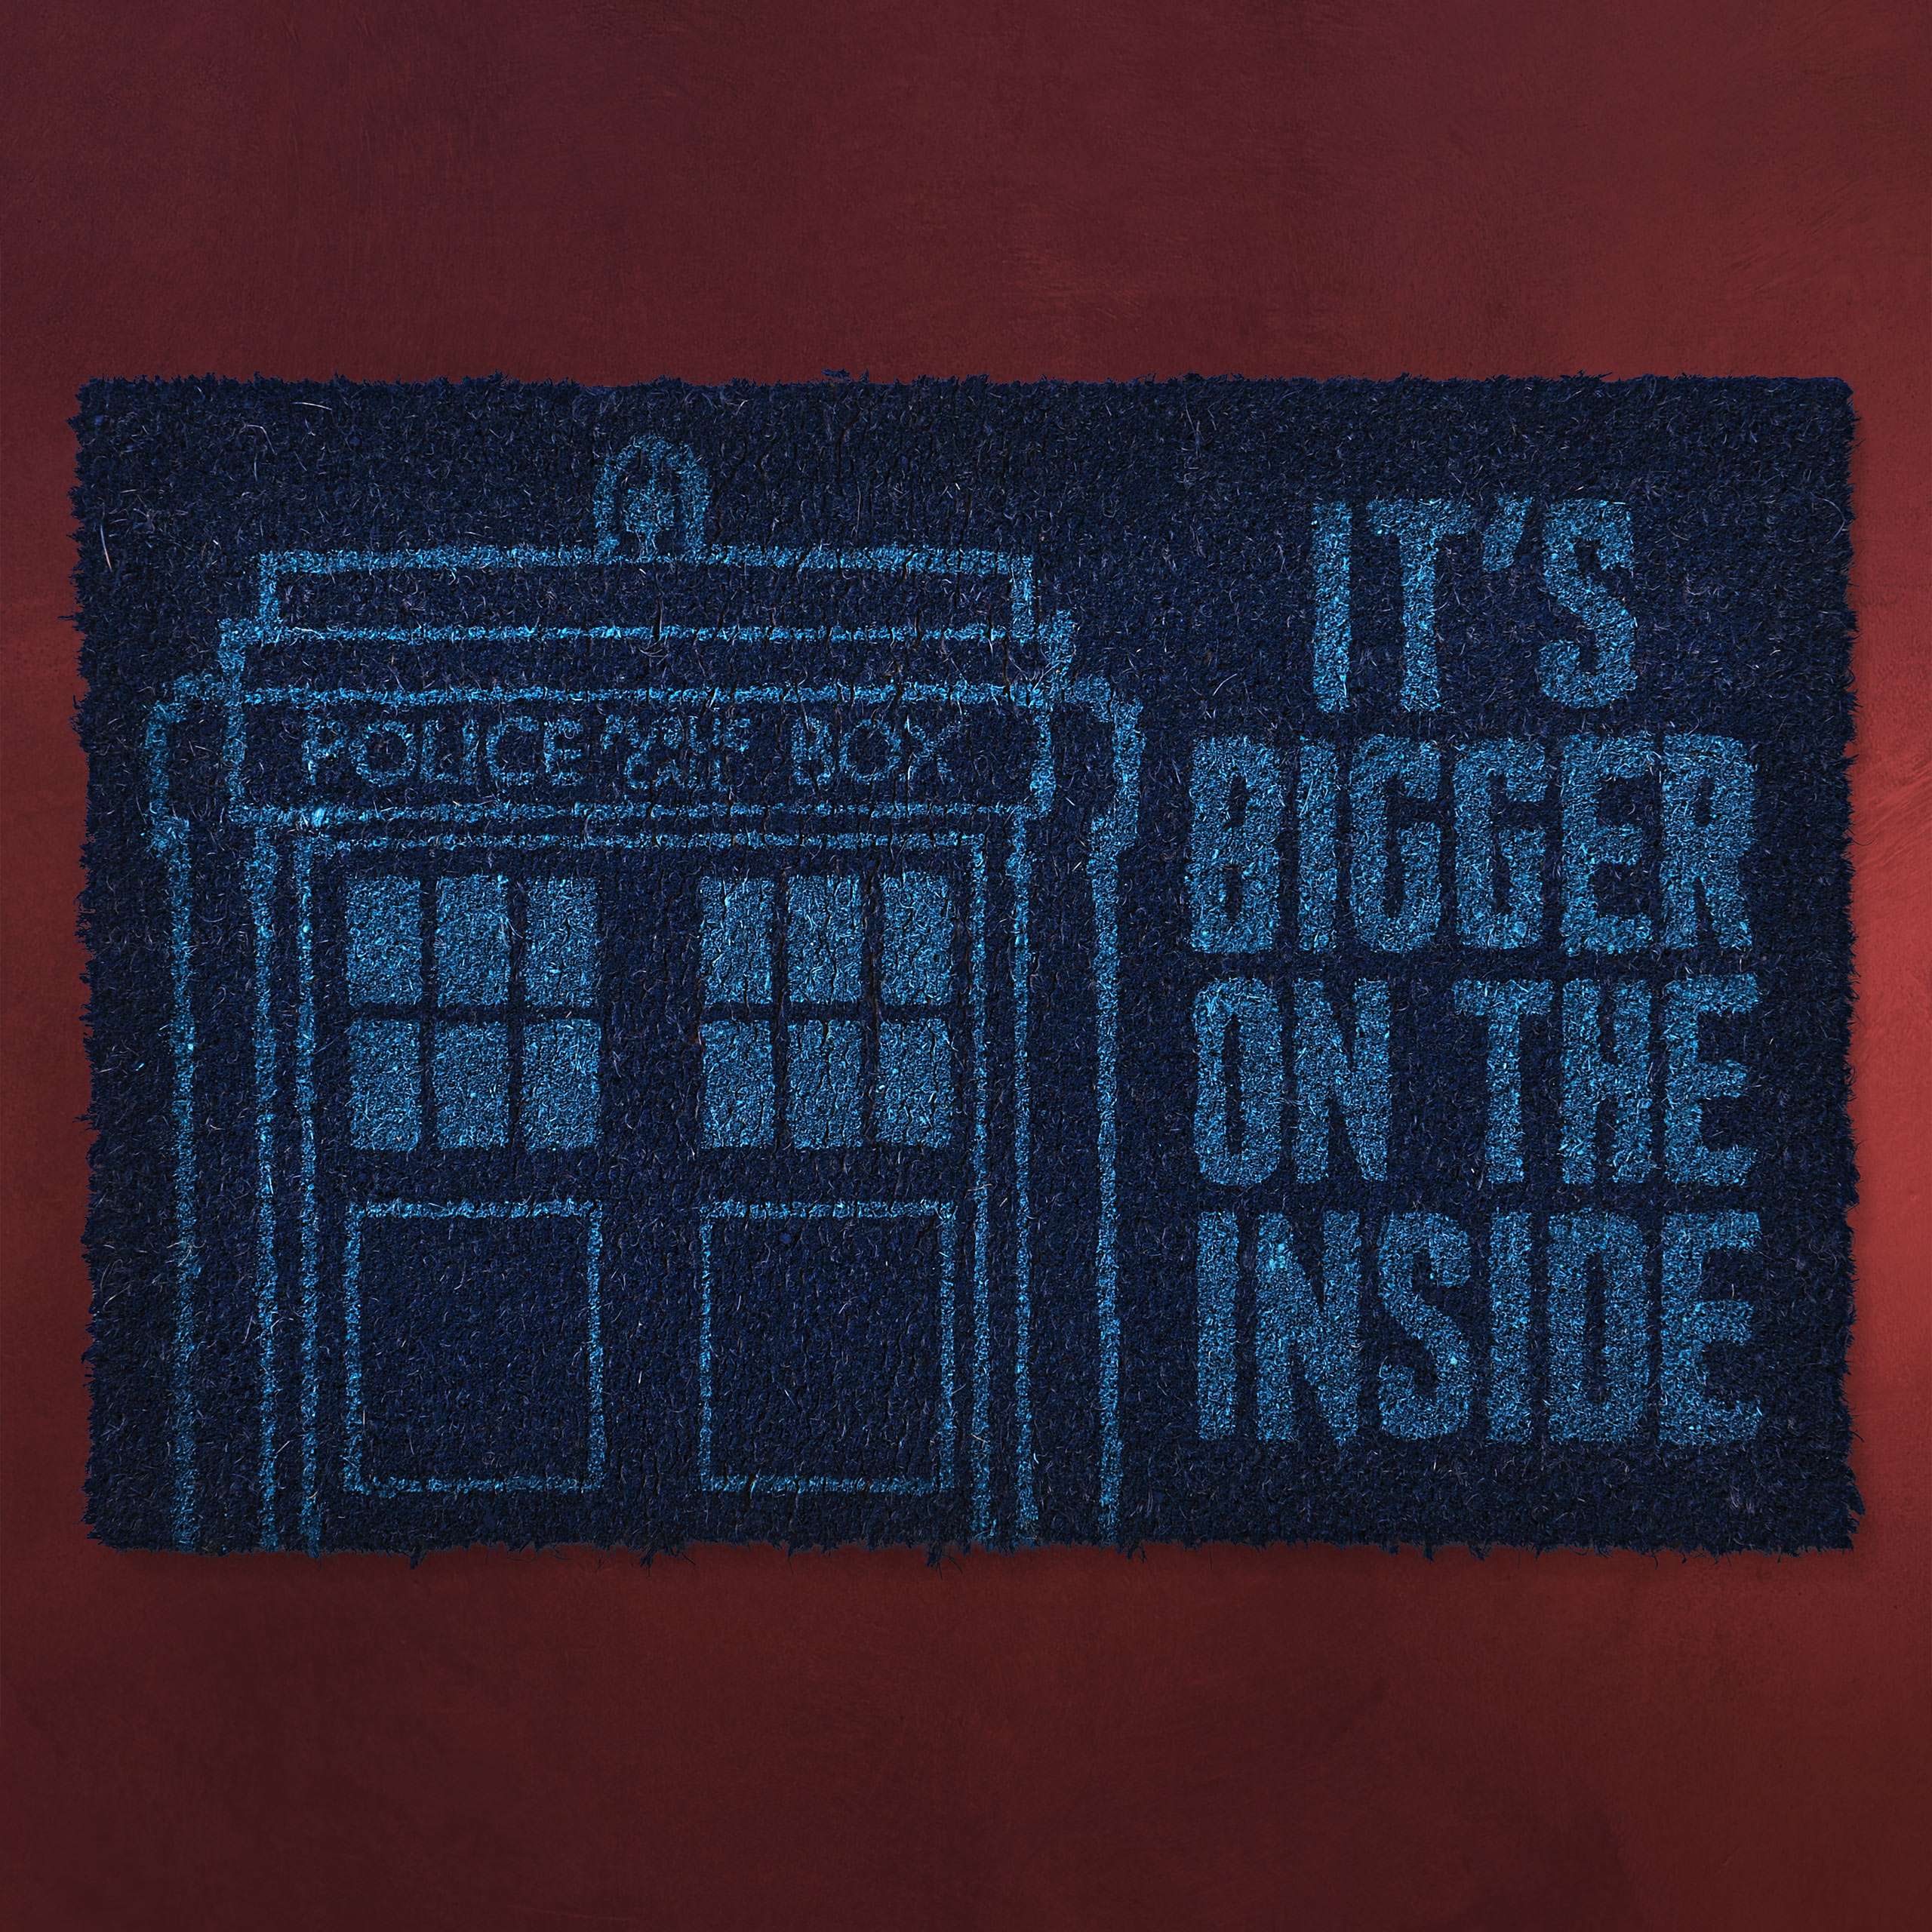 Doctor Who Tardis Fußmatte 60 x 40 cm